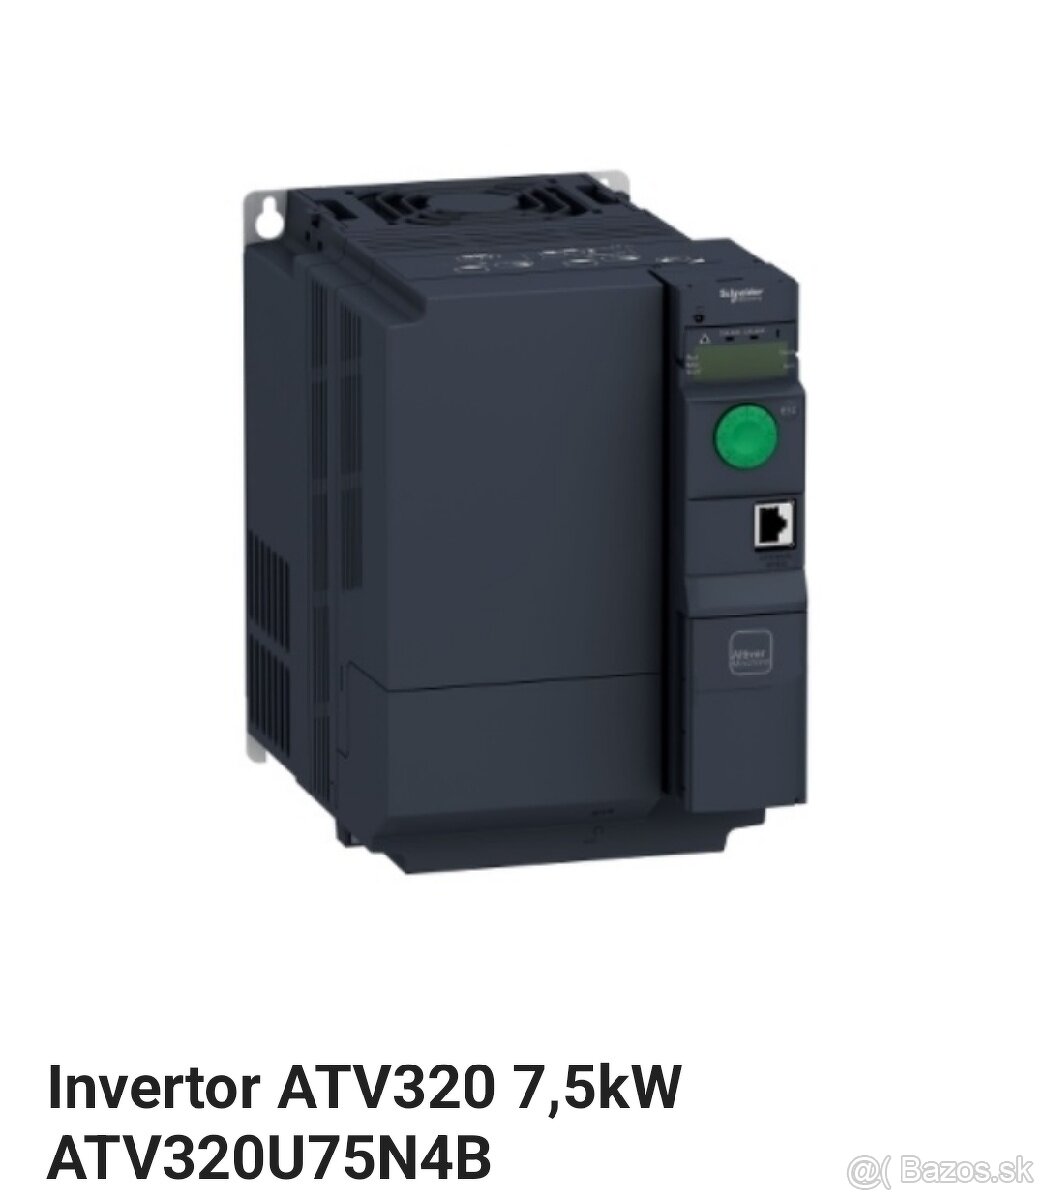 Invertor ATV320 7,5kW ATV320U75N4B